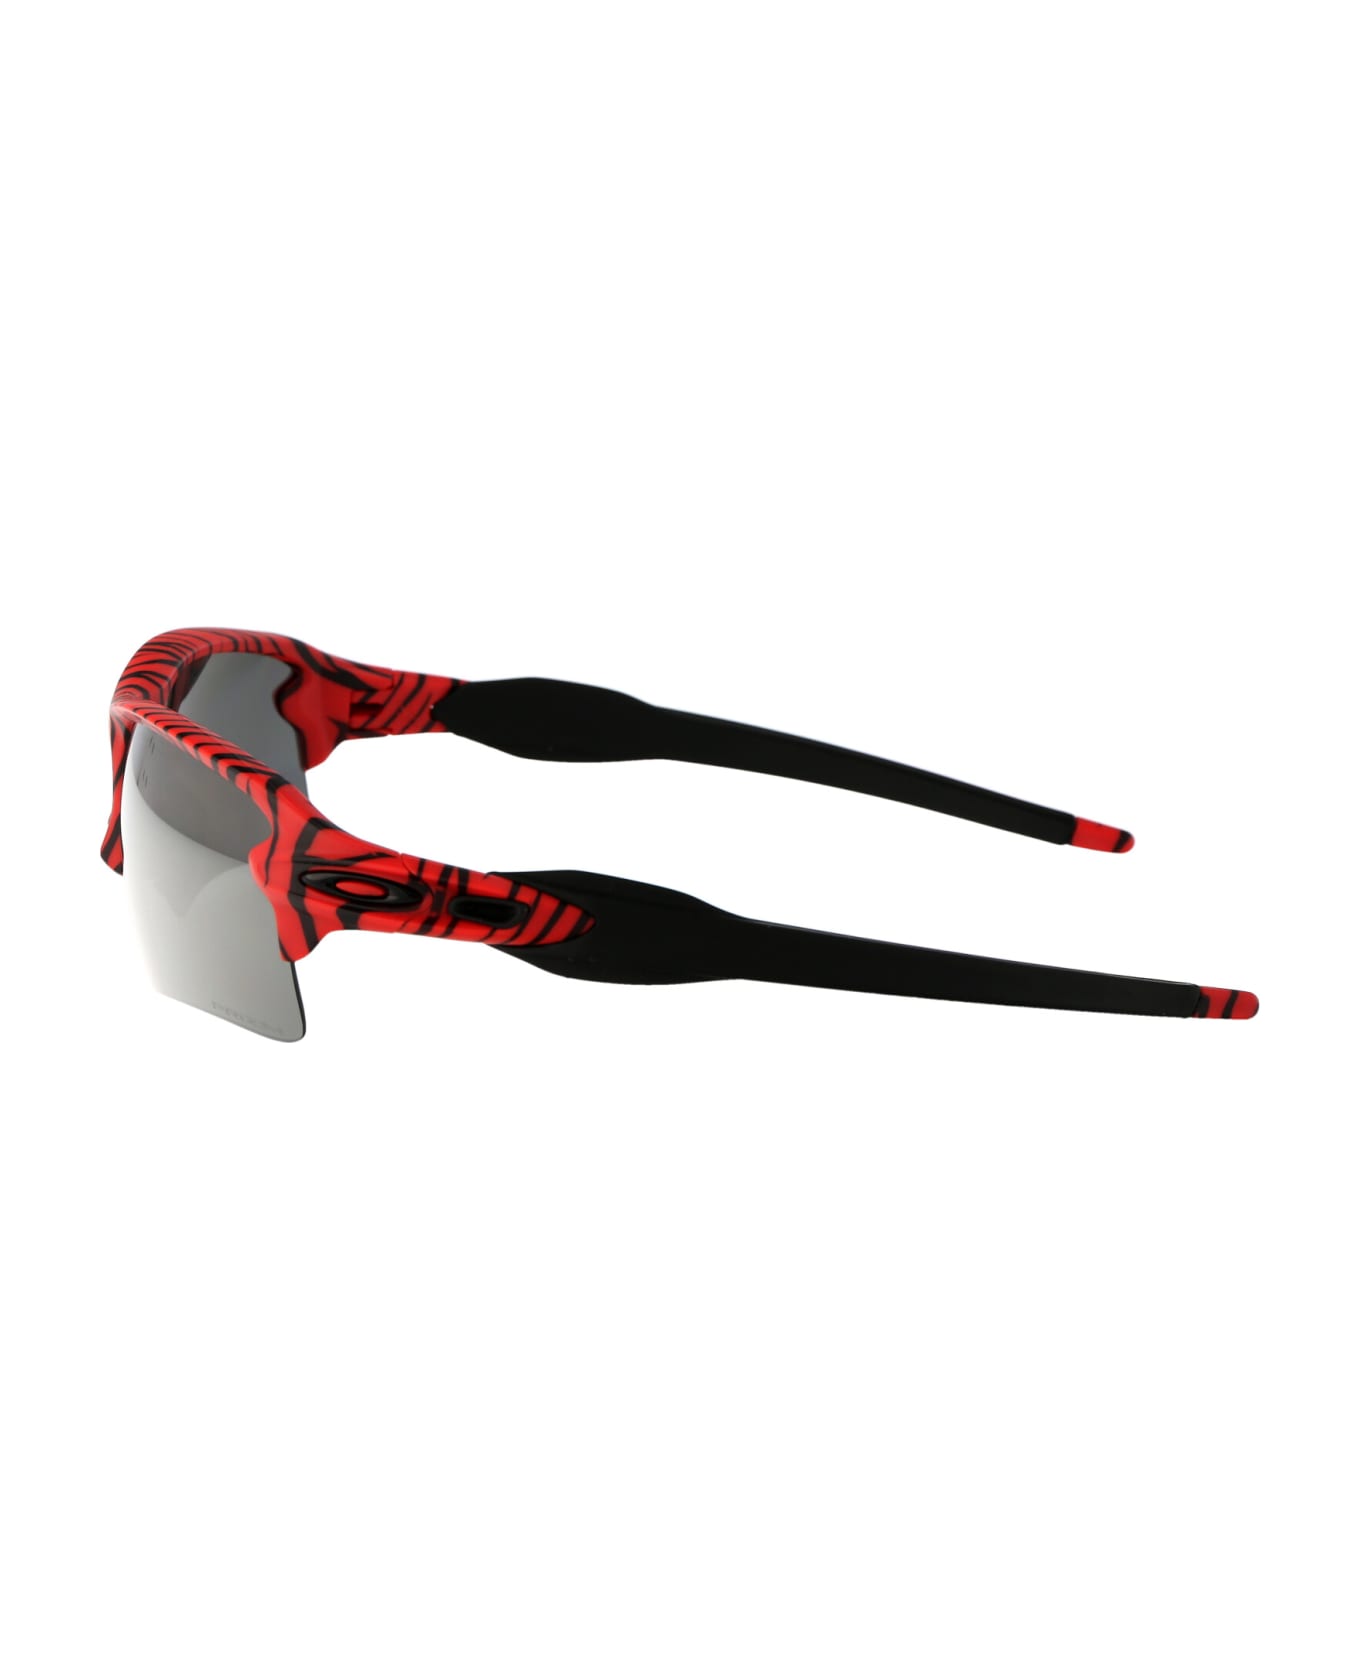 Oakley Flak 2.0 Xl Sunglasses - Red サングラス